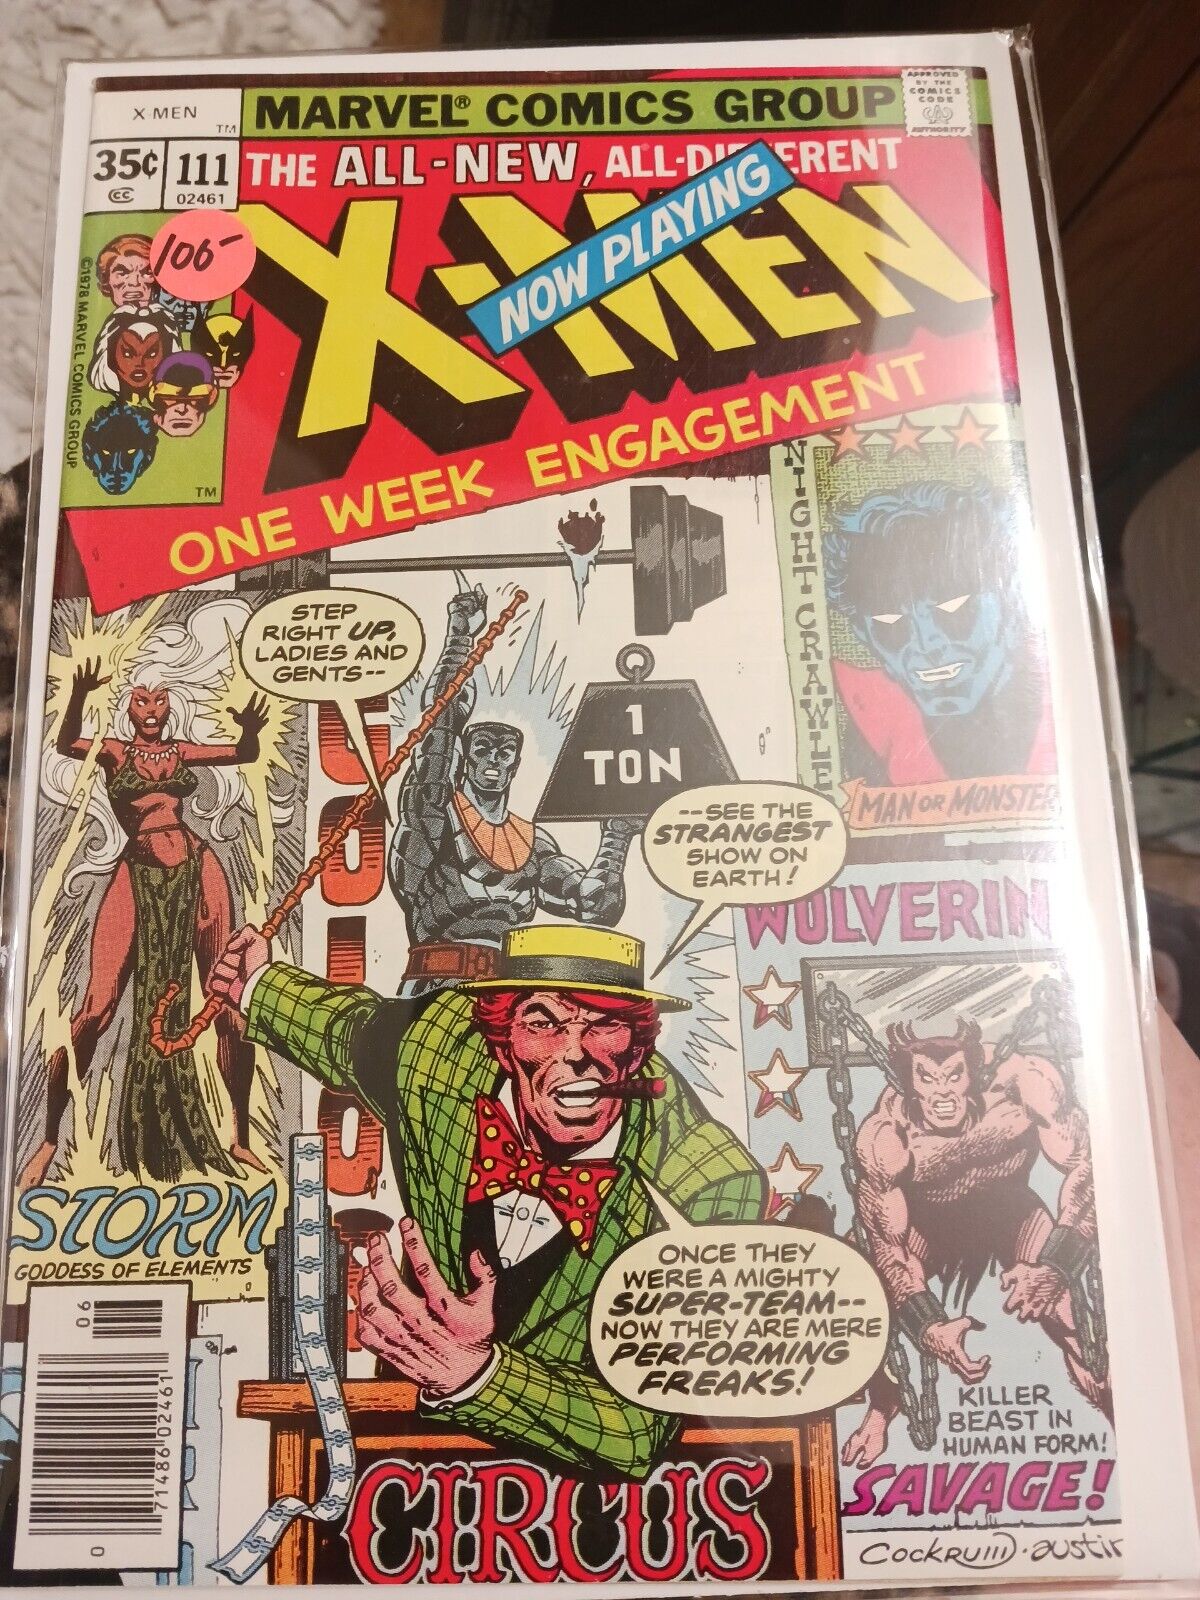 June 1978 Vol 1 No. 111 X-Men One Week Engagement Circus Comic Book Marvel Xmen